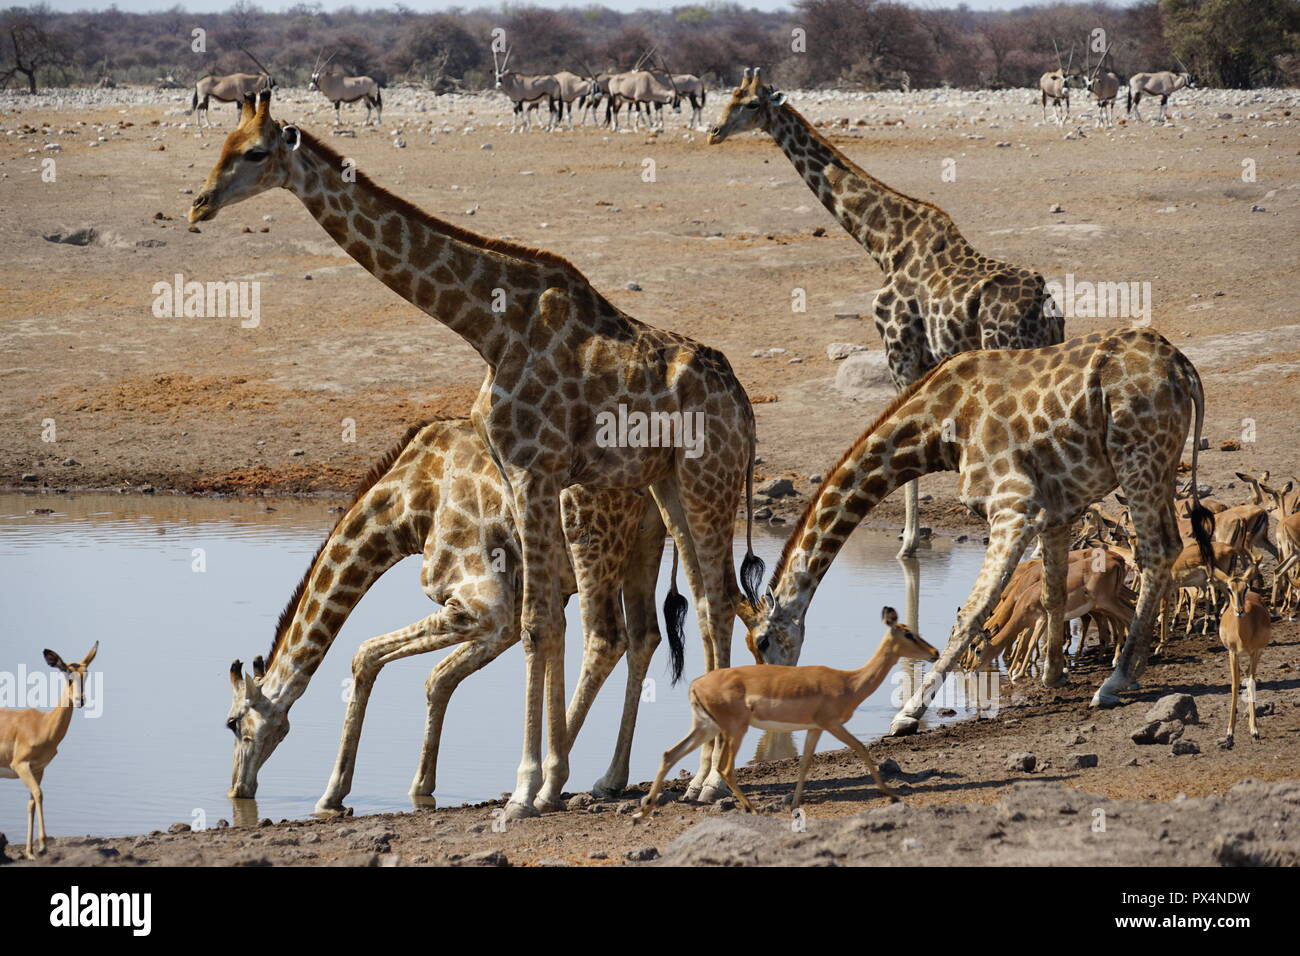 Giraffen und andere Tiere am Wasserloch 'Chudob' Etosha Nationalpark, Namibia Namibia, Afrika Foto Stock